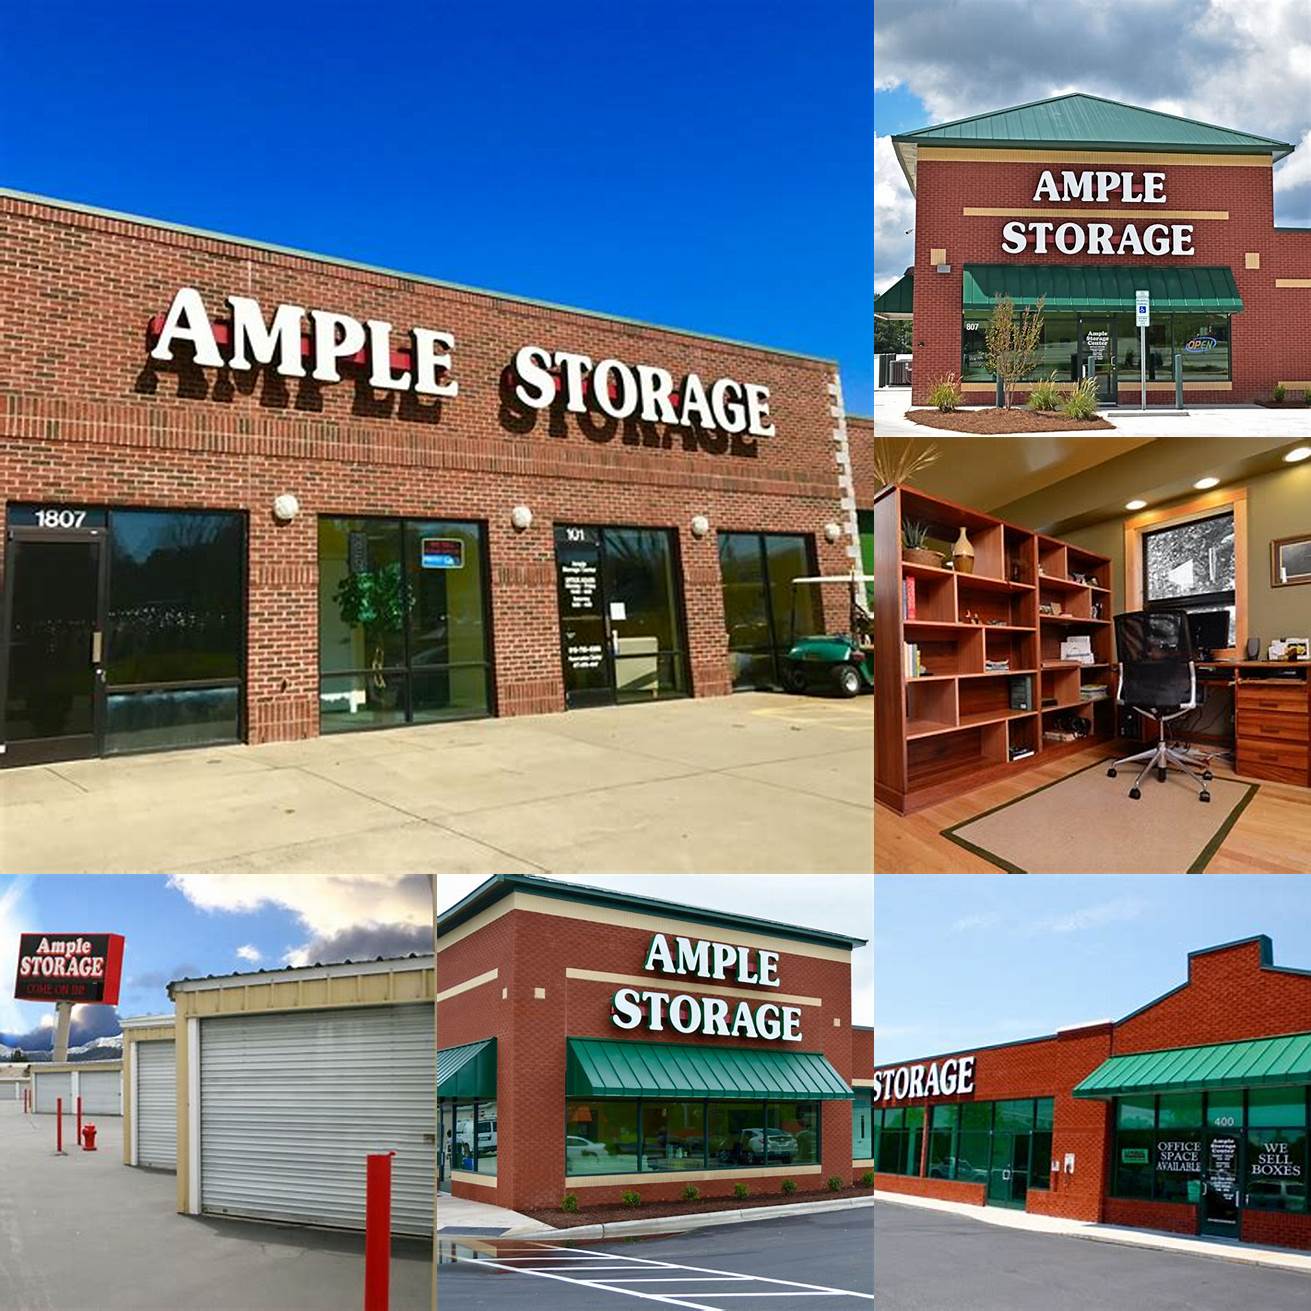 3 Ample storage